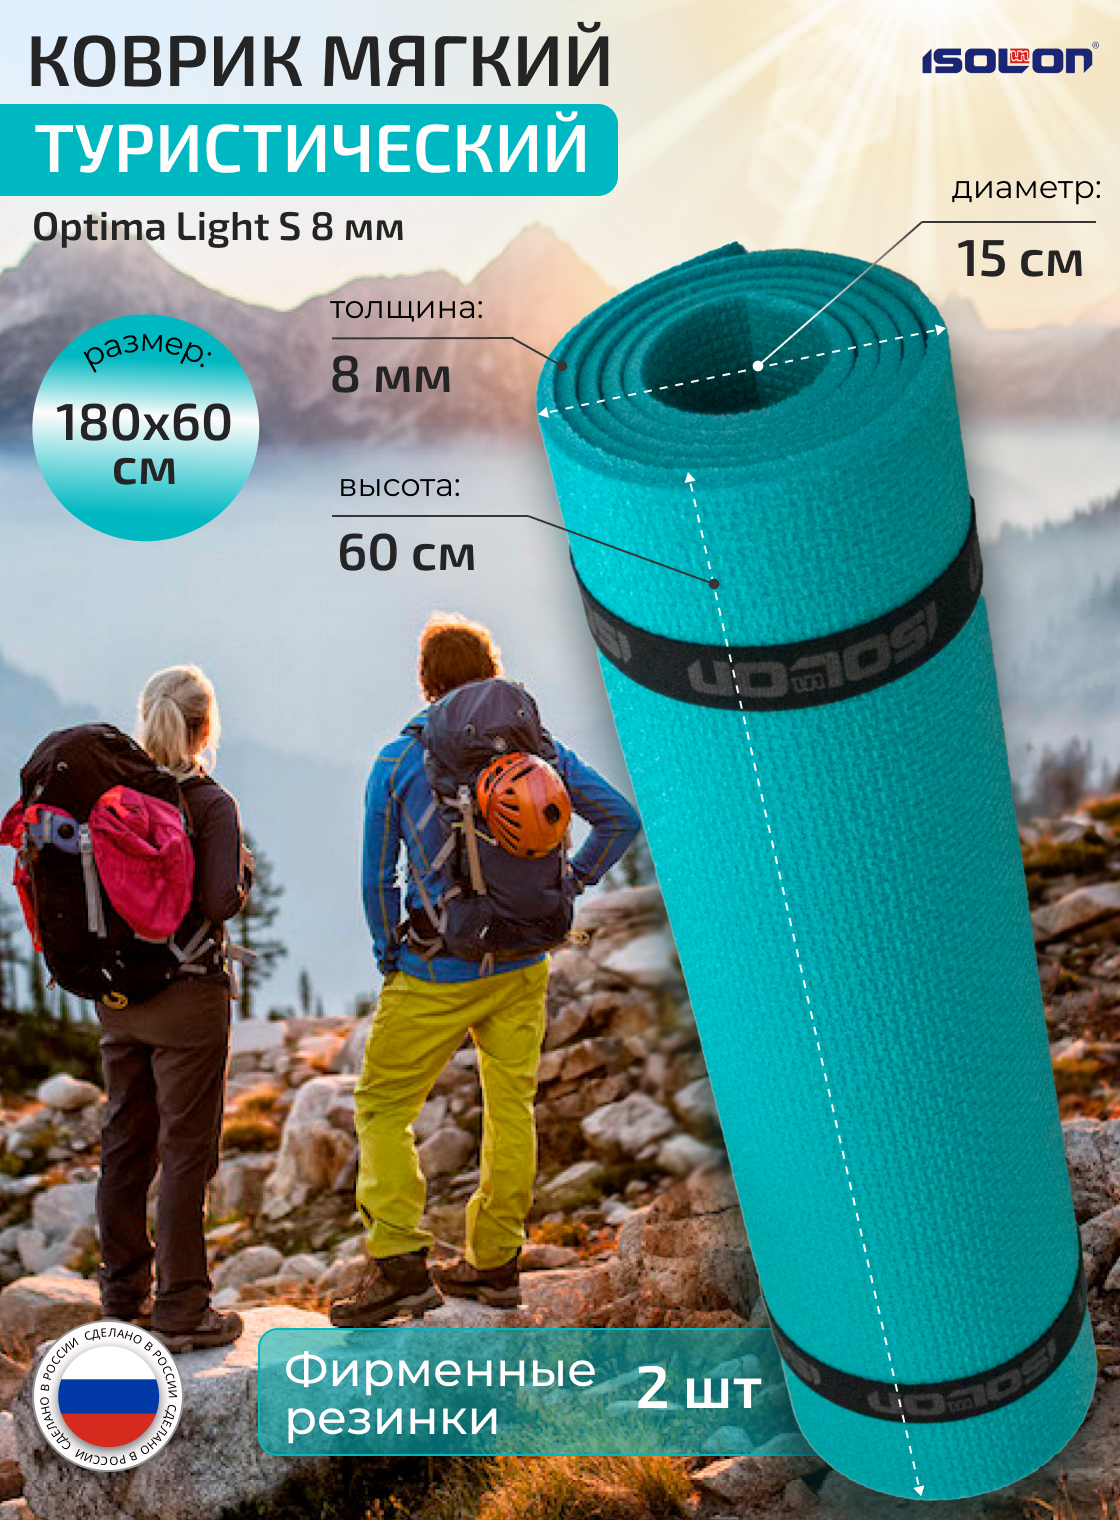 Коврик для туризма и отдыха ISOLON Optima Light S8, 180х60 см бирюзовый